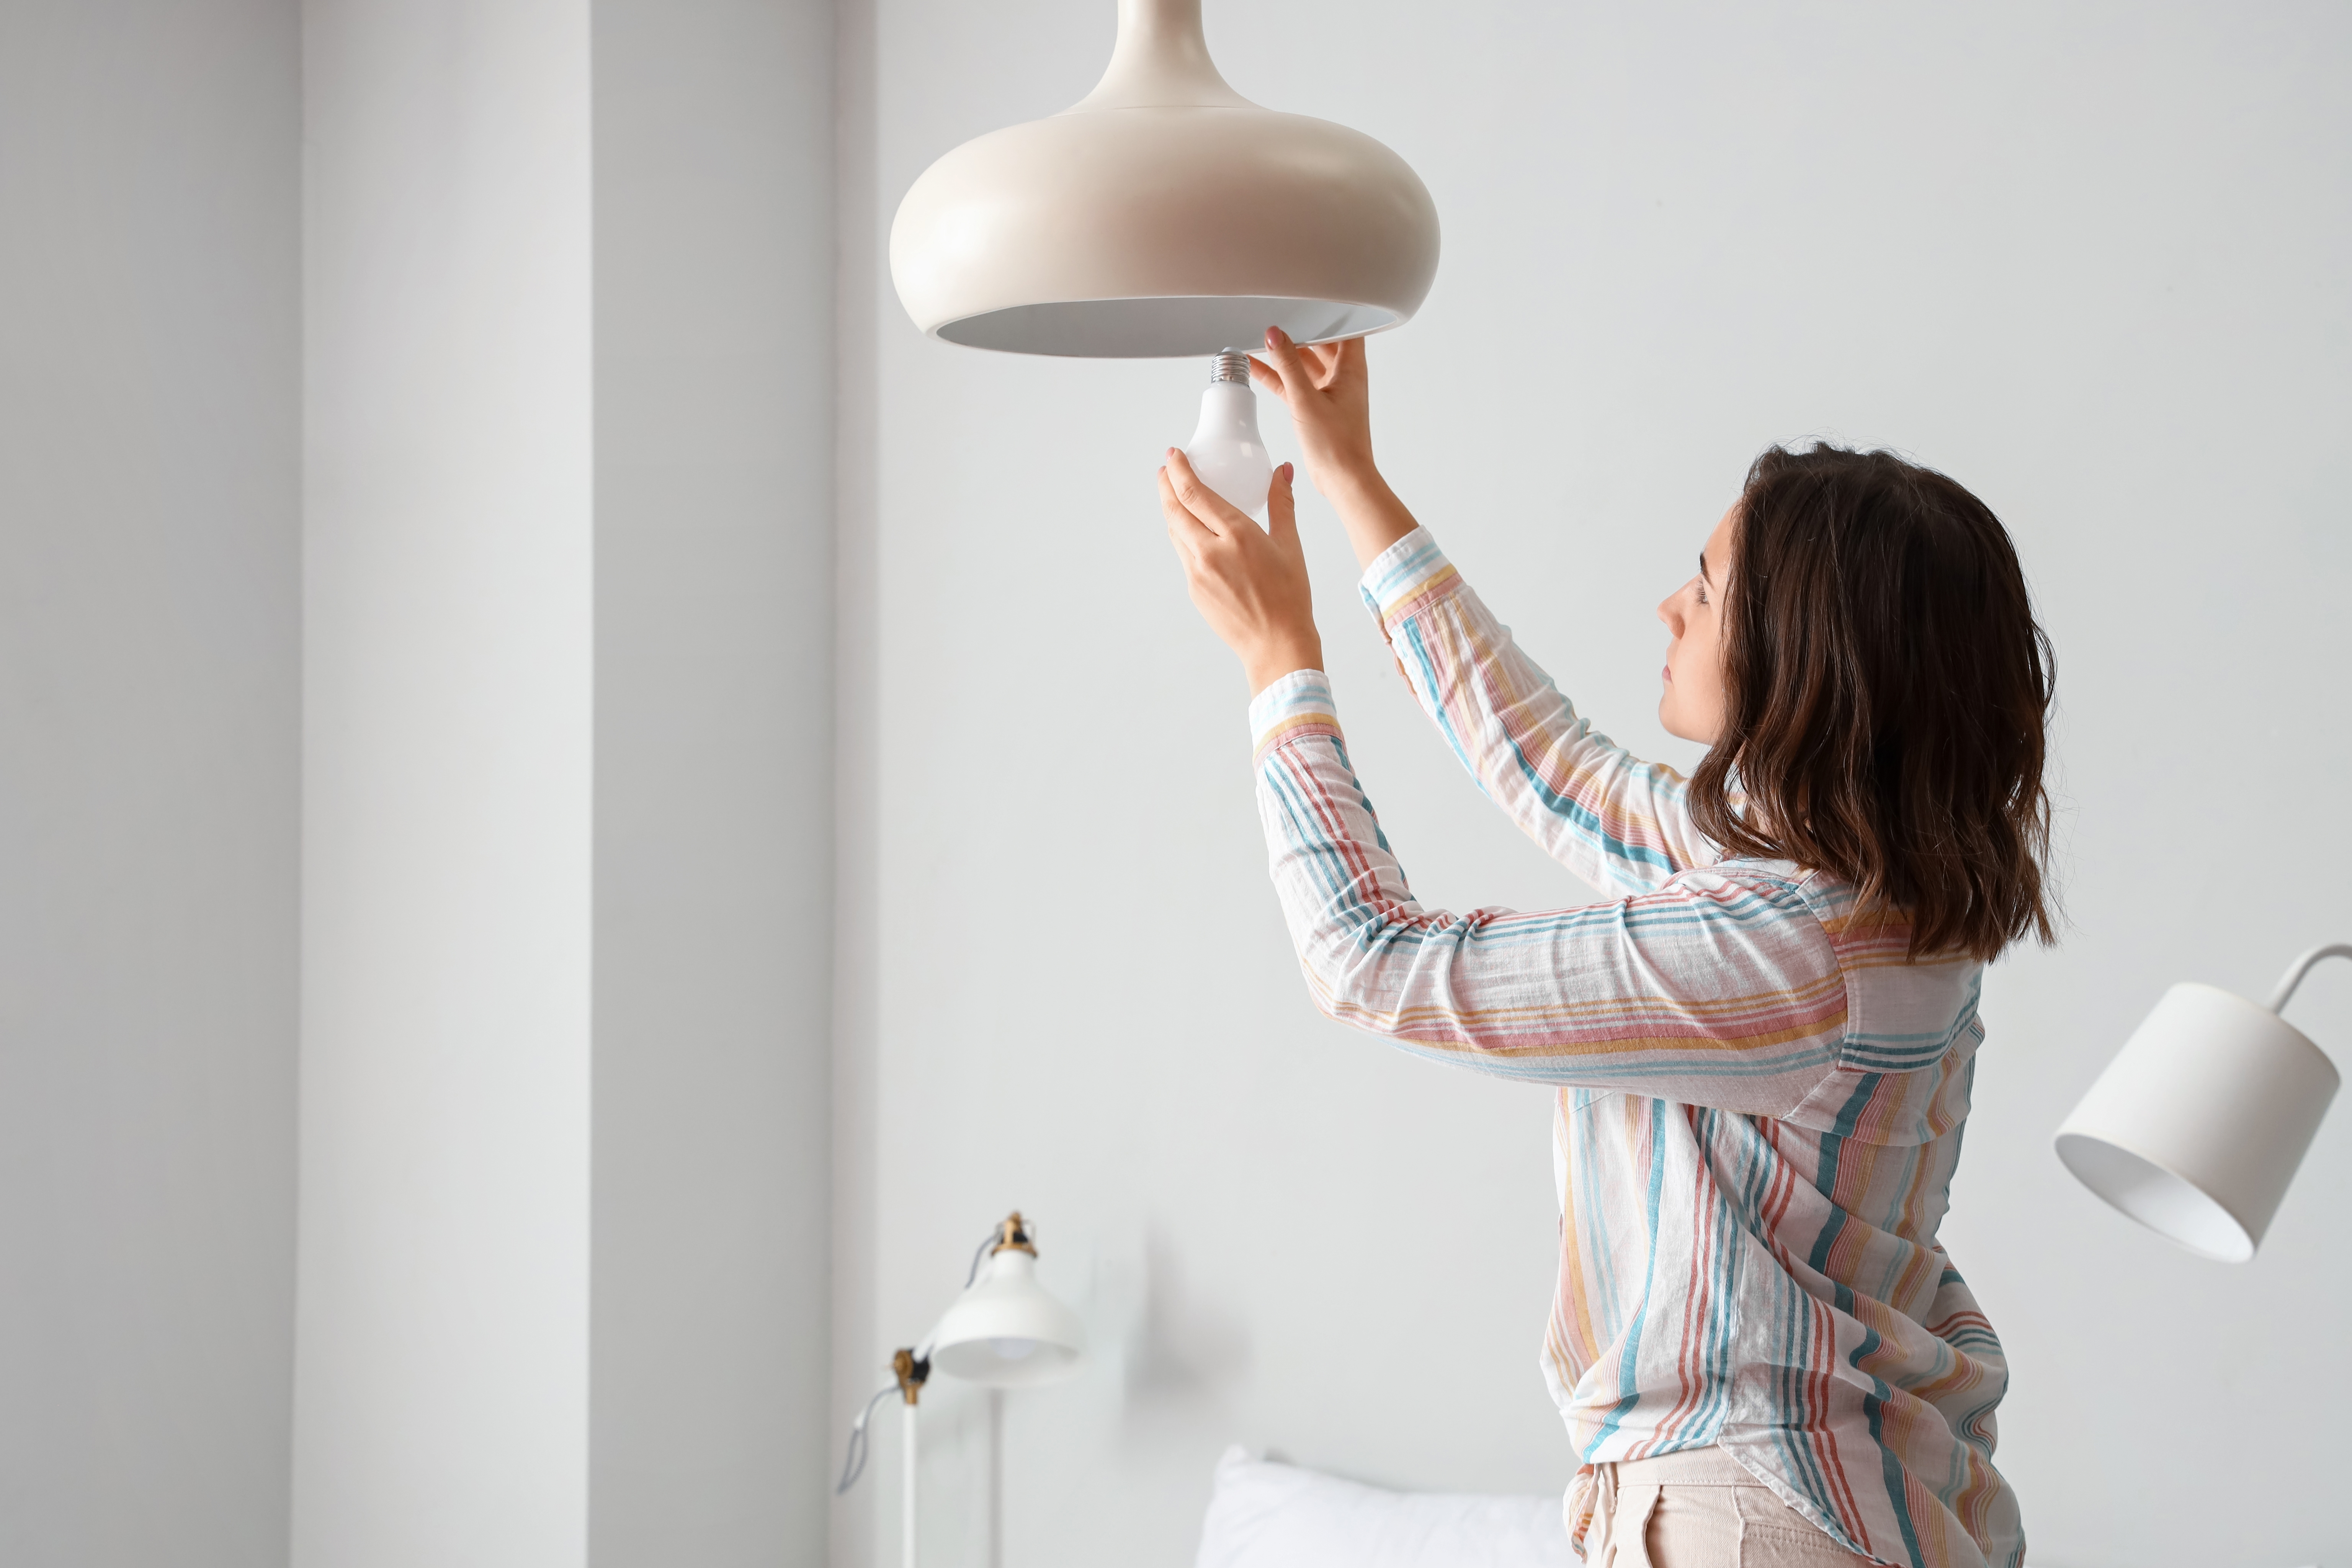 Woman installing an LED light bulb in an overhead light